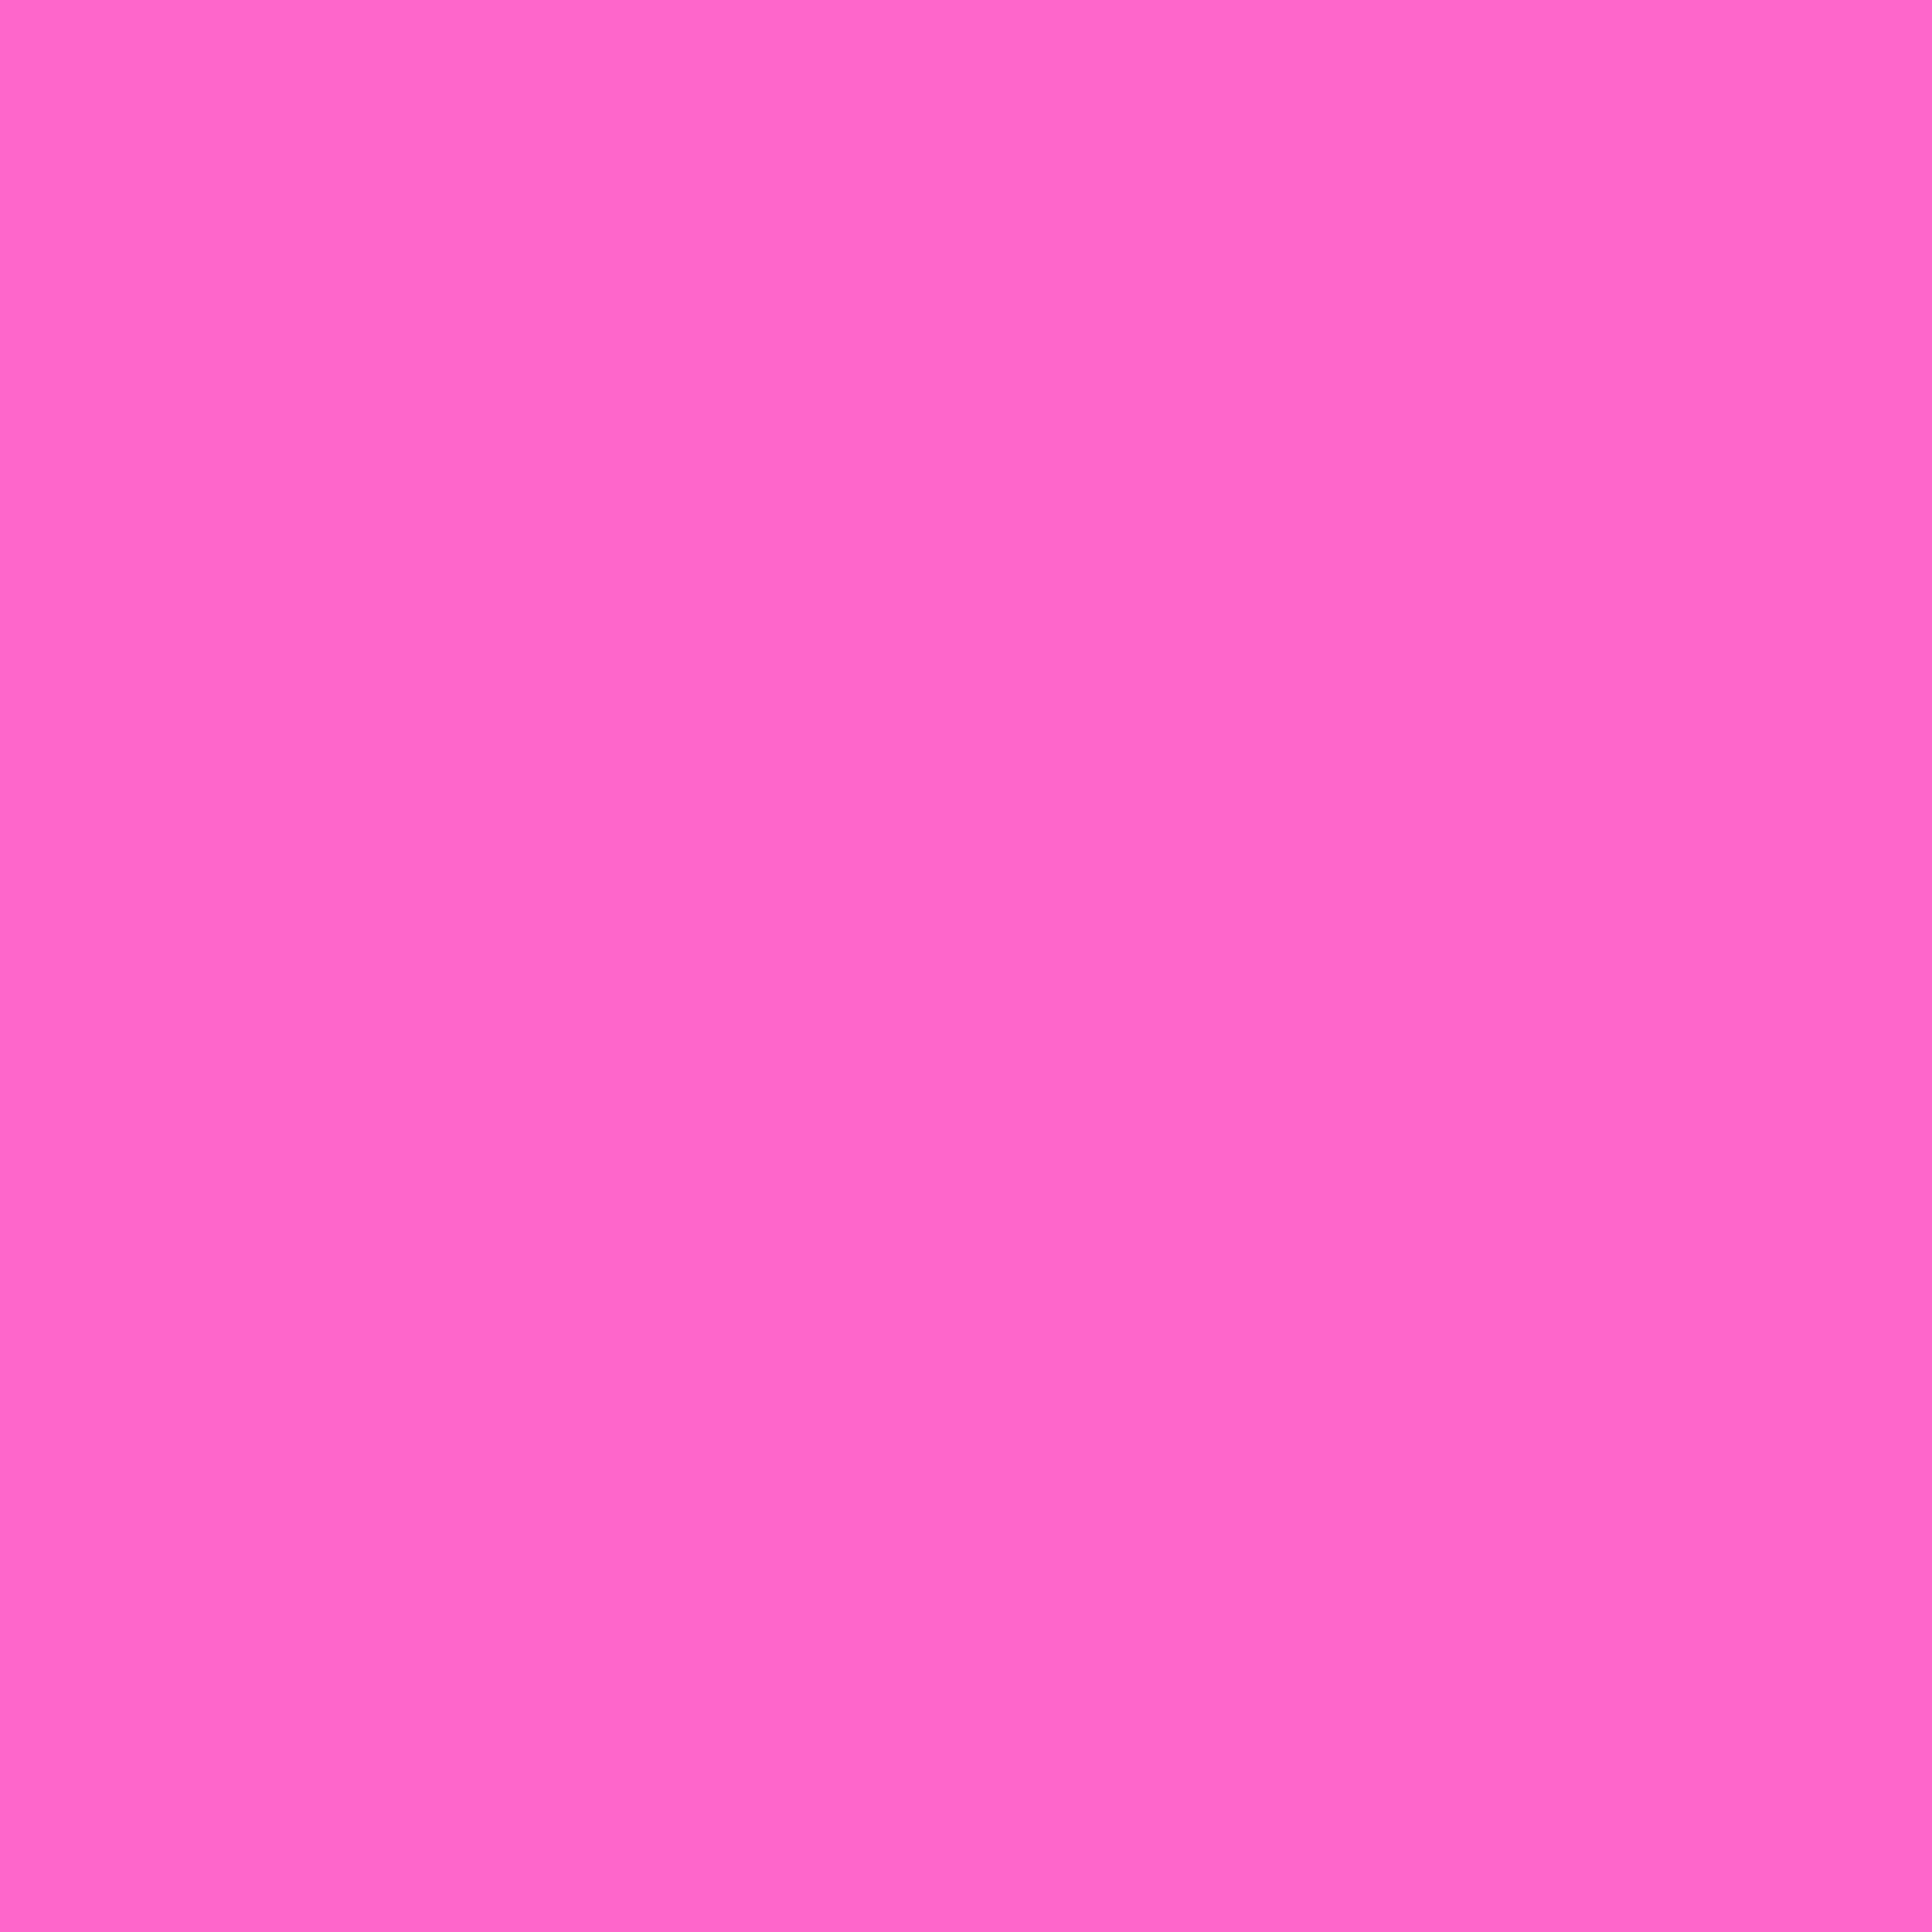 2048x2048 Rose Pink Solid Color Background